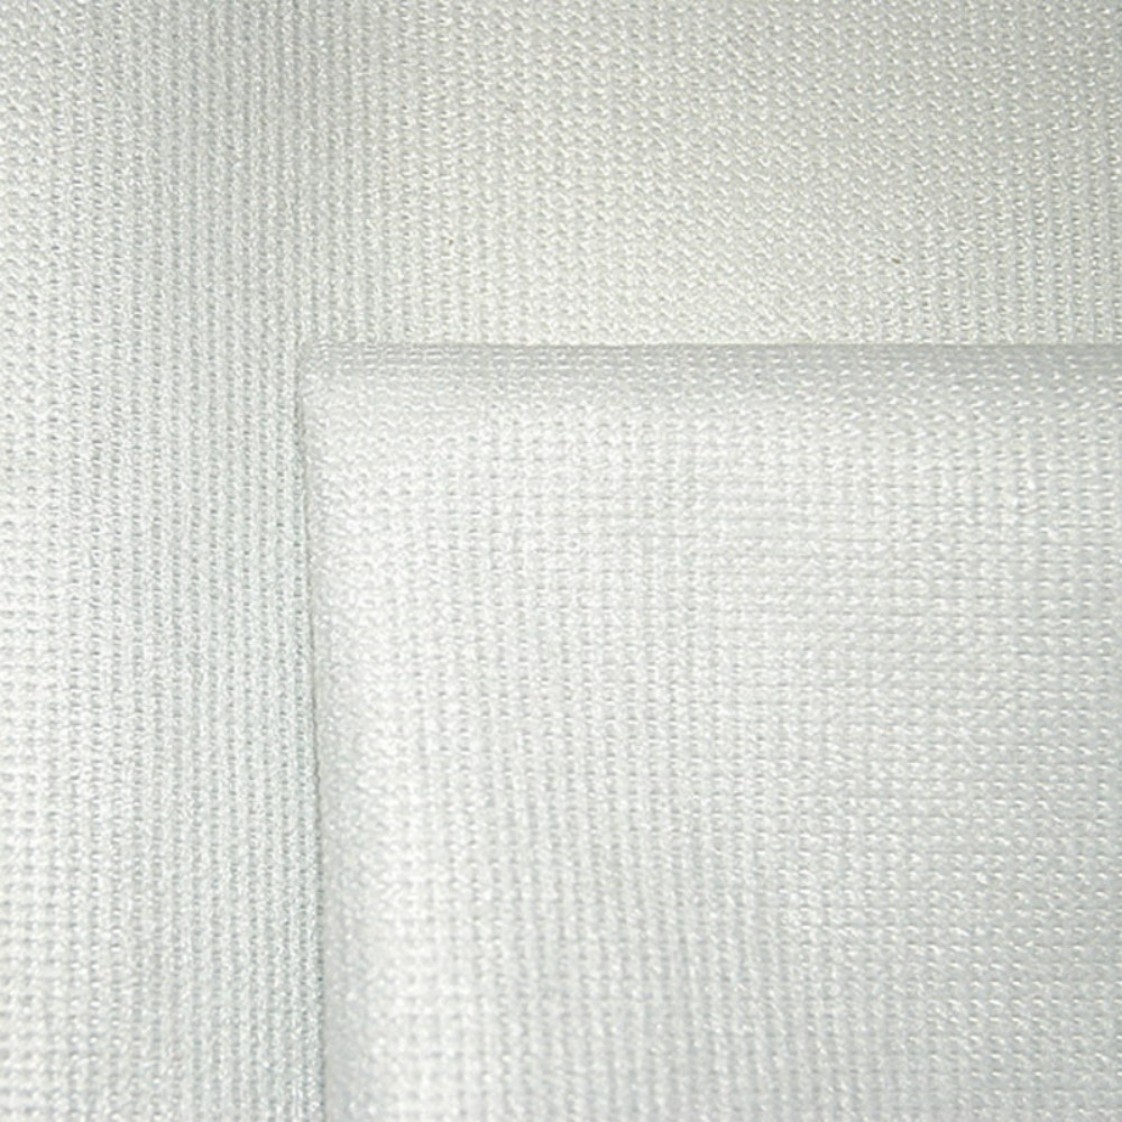 Shopping Bag Use 14 Gauges 70GSM RPET Stitchbond Polyester Fabric